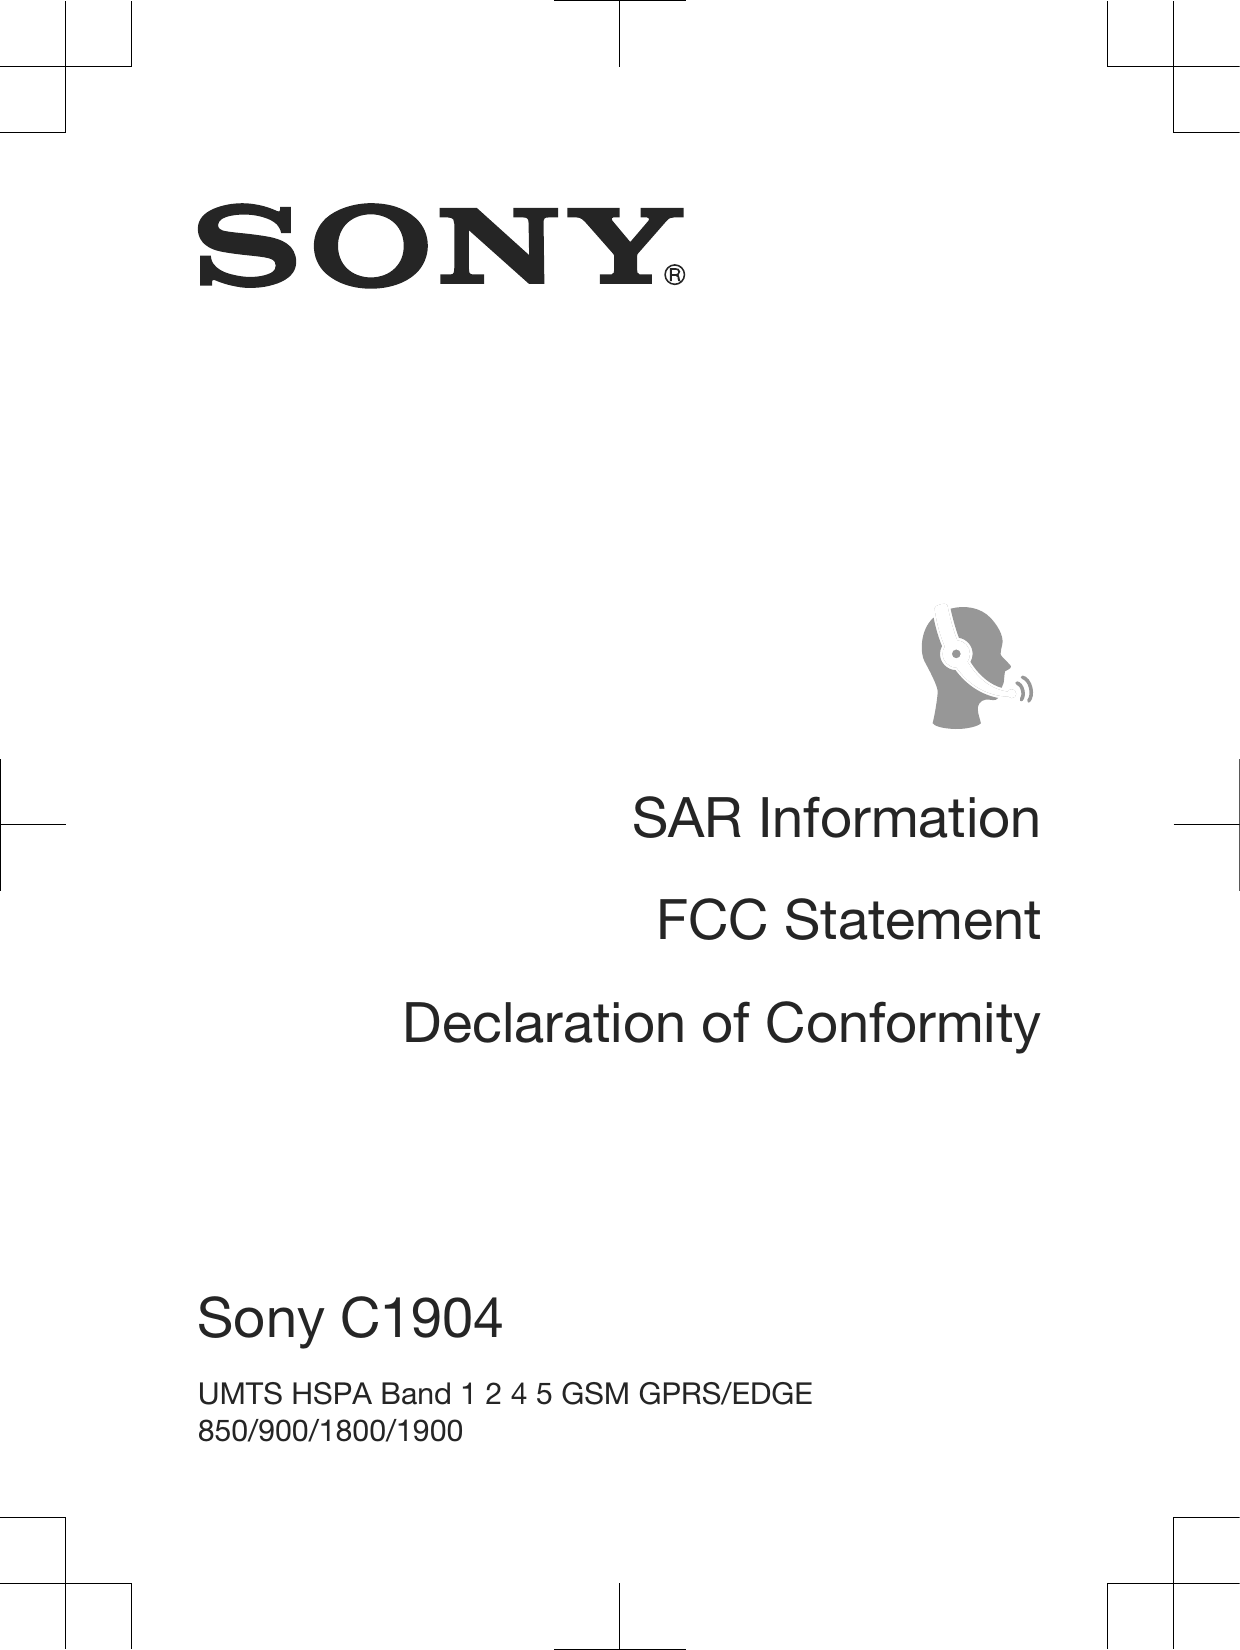 SAR InformationFCC StatementDeclaration of ConformitySony C1904 UMTS HSPA Band 1 2 4 5 GSM GPRS/EDGE850/900/1800/1900